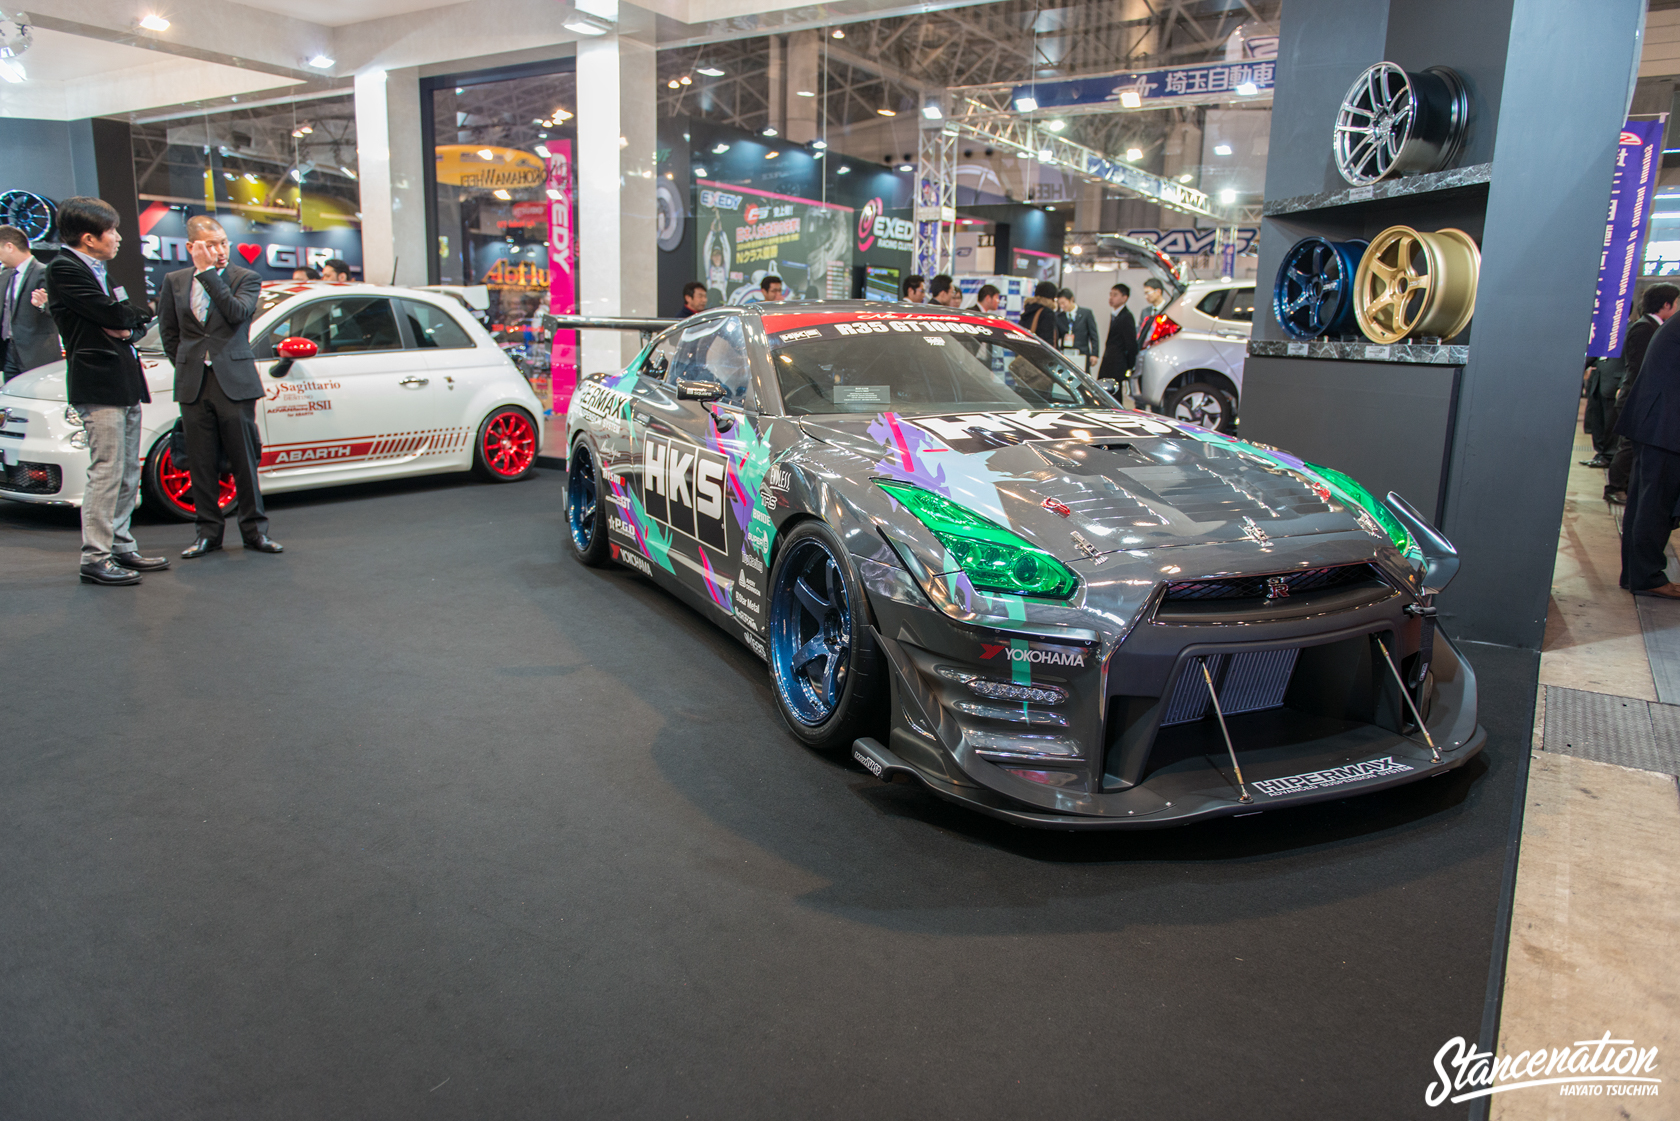 Photos: Cool Cars on Display at Tokyo Auto Salon 2015 - WSJ